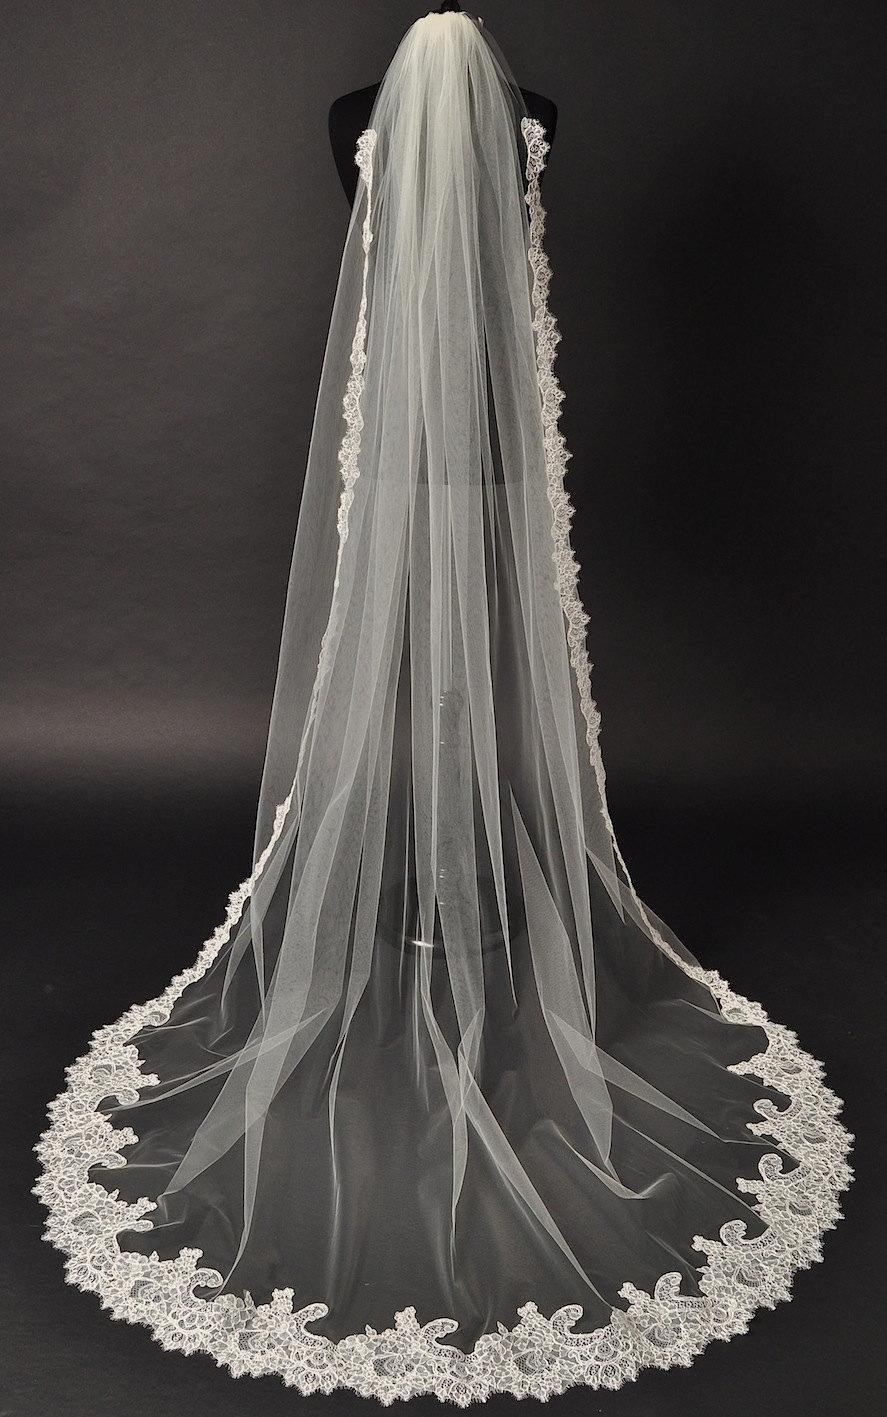 Свадьба - Cathedral Lace Veil, Alencon lace bridal veil, couture bridal veil, Chapel veil, wedding veil, single layer veil, ivory veil, diamond veil.